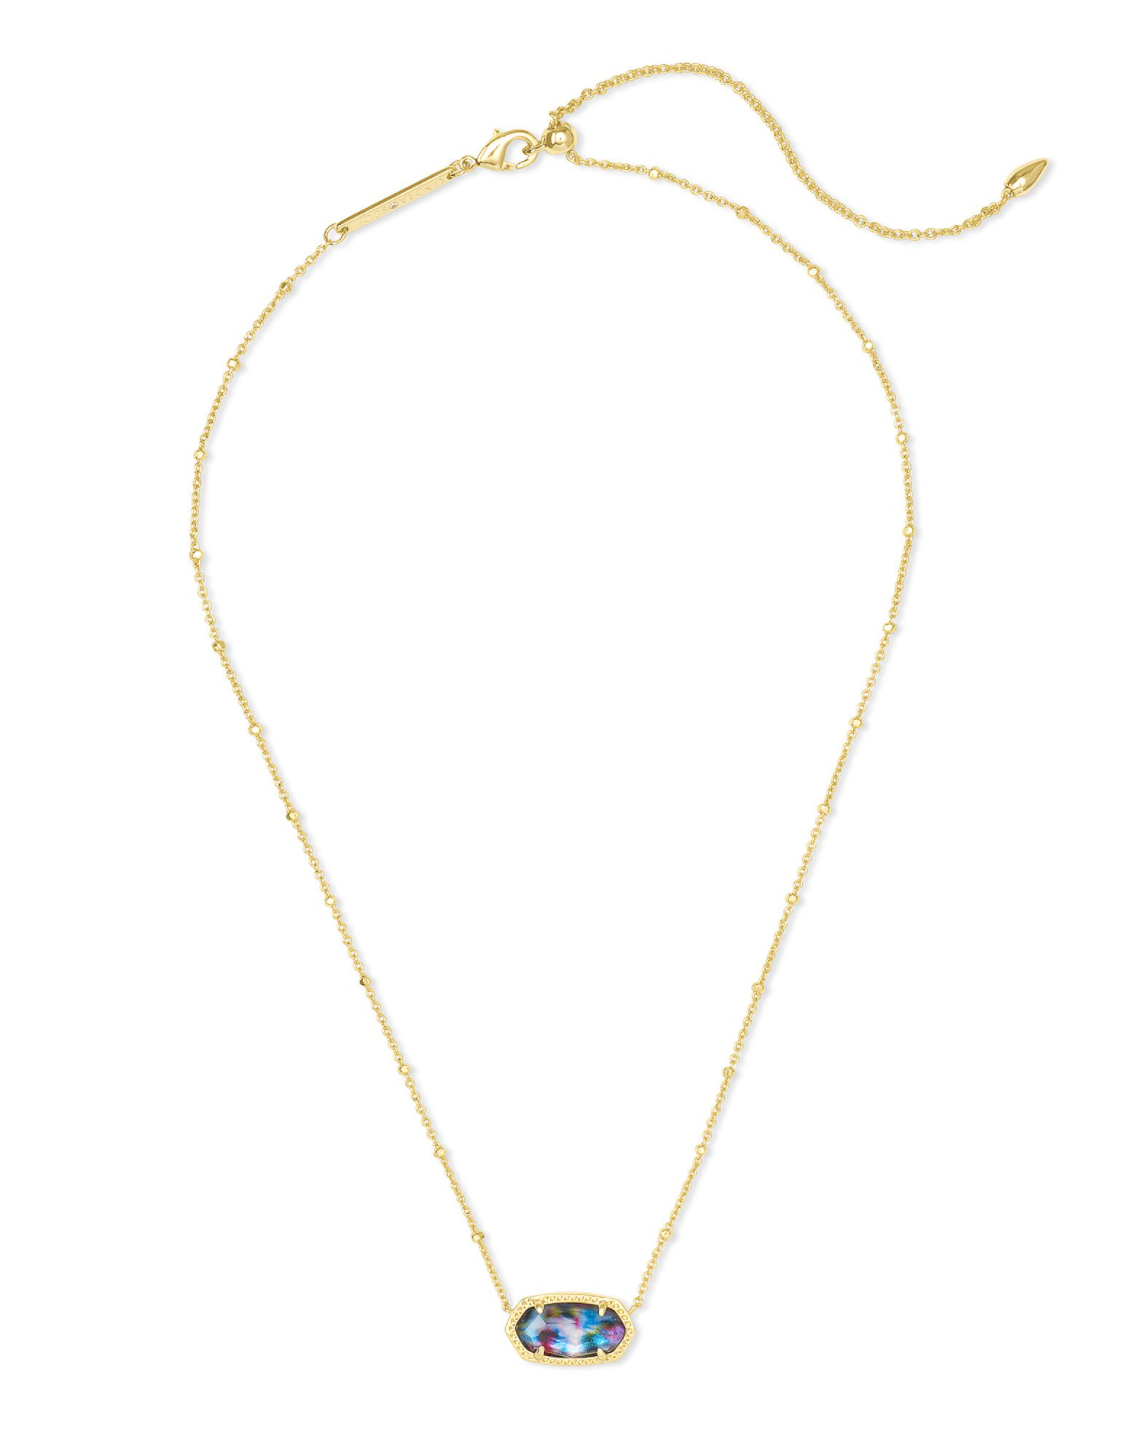 Kendra Scott Elisa Satellite Short Necklace - Gold Teal Tie Dye Illusion